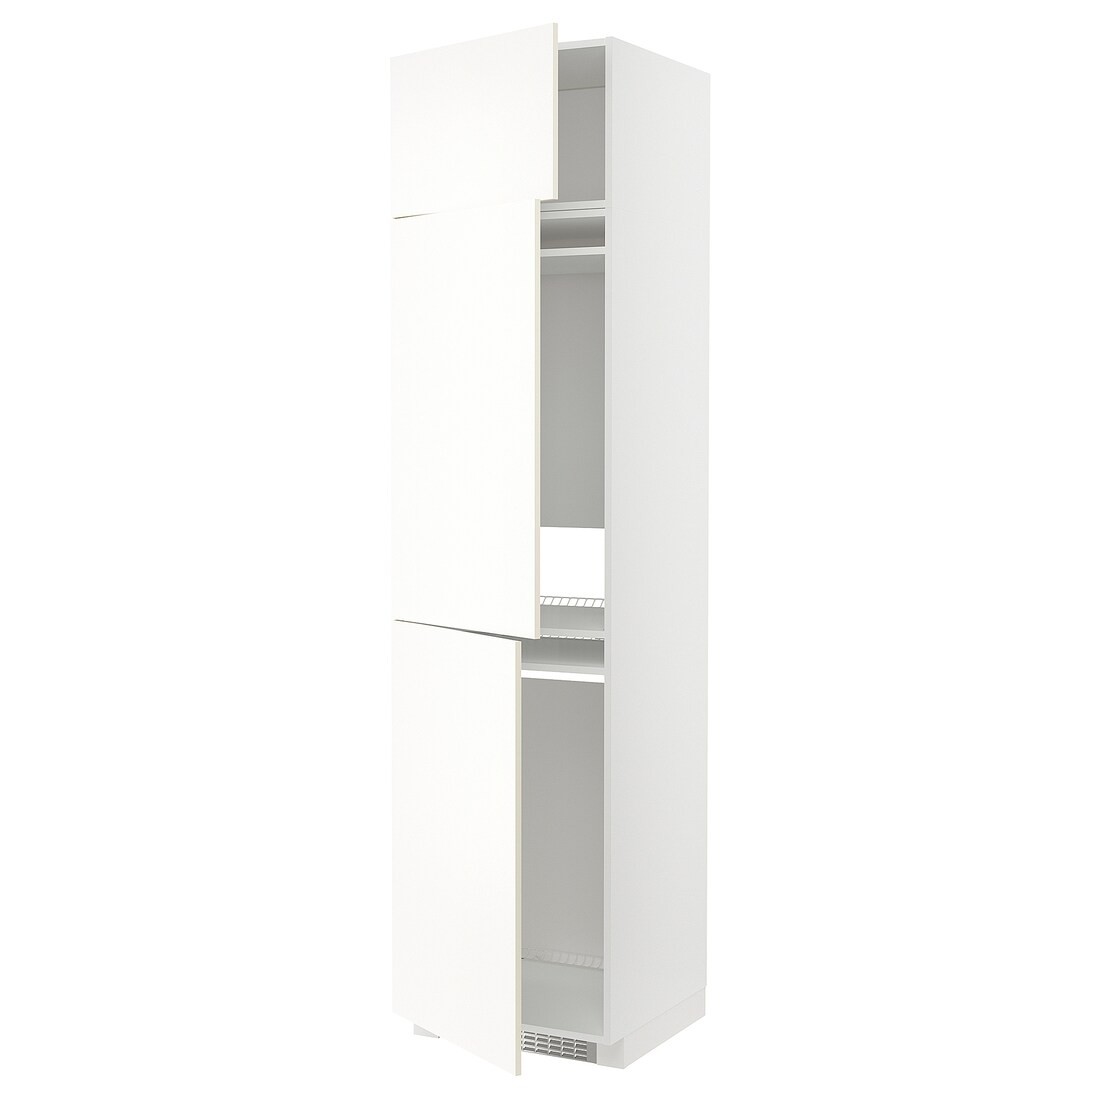 IKEA METOD МЕТОД Высокий шкаф для холодильника / морозильника / 3 дверцы, белый / Vallstena белый 69507365 695.073.65